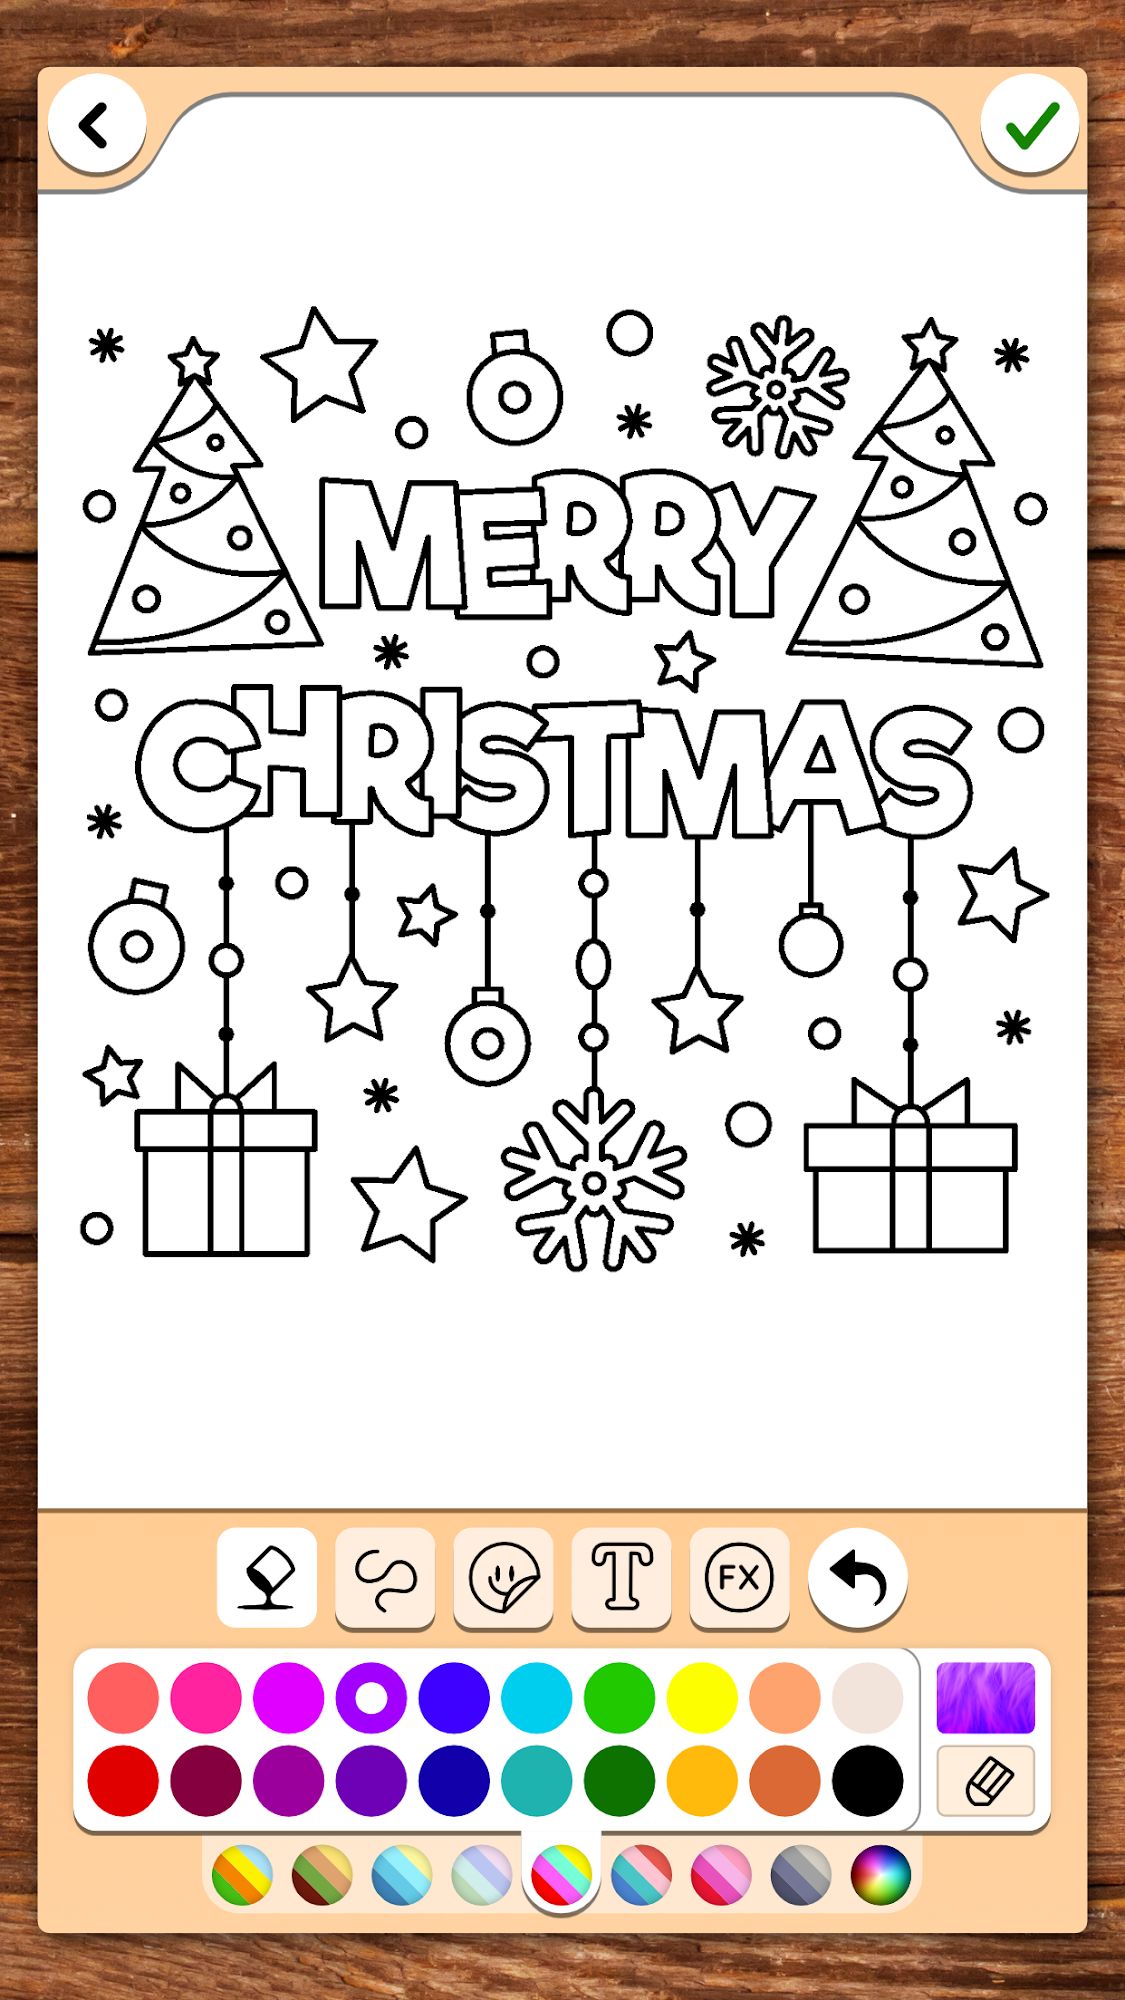 Christmas Coloring - Android game screenshots.